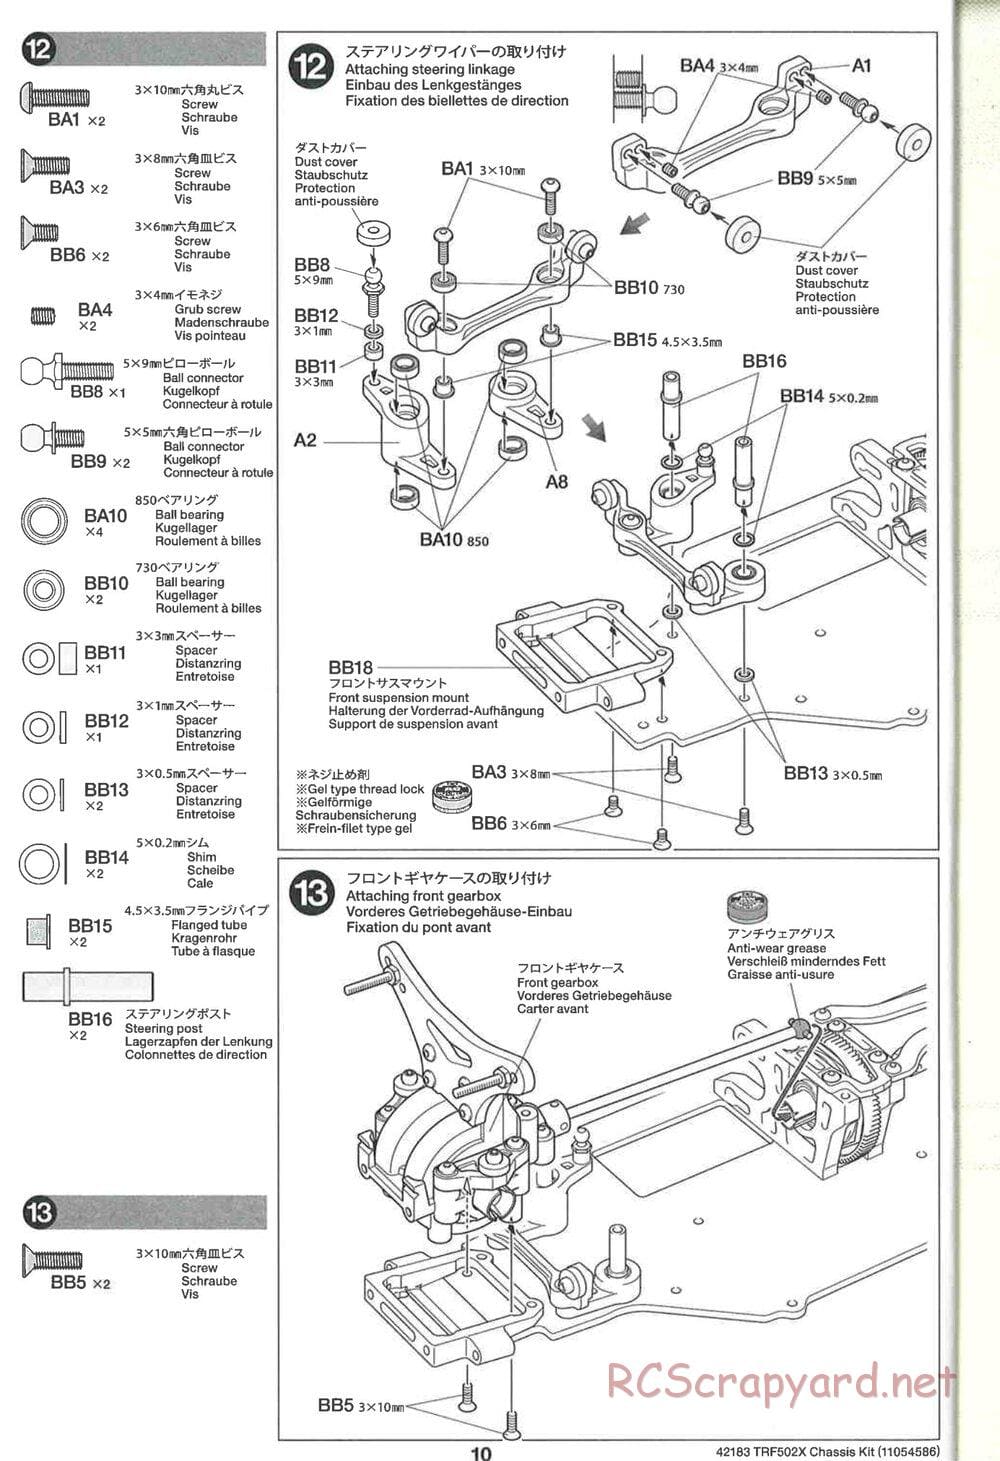 Tamiya - TRF502X Chassis - Manual - Page 10